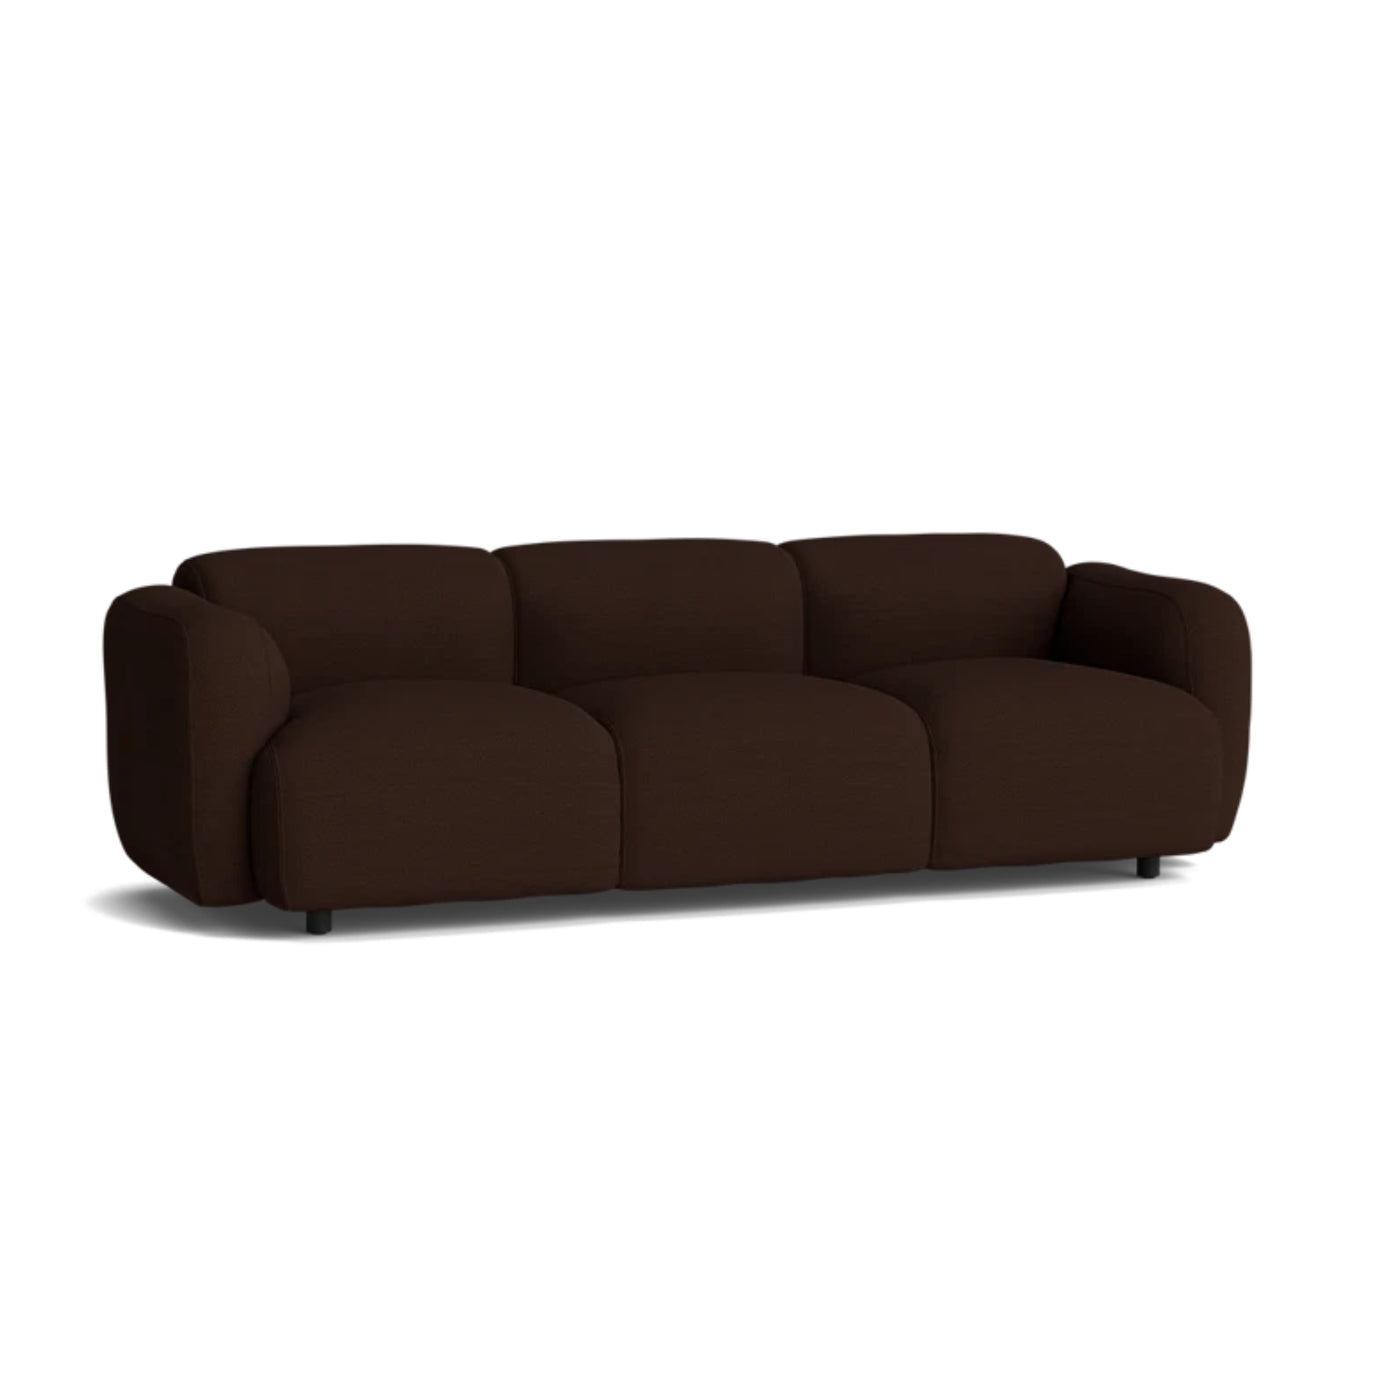 Normann Copenhagen Swell 3 Seater Sofa at someday designs. #colour_hallingdal-376